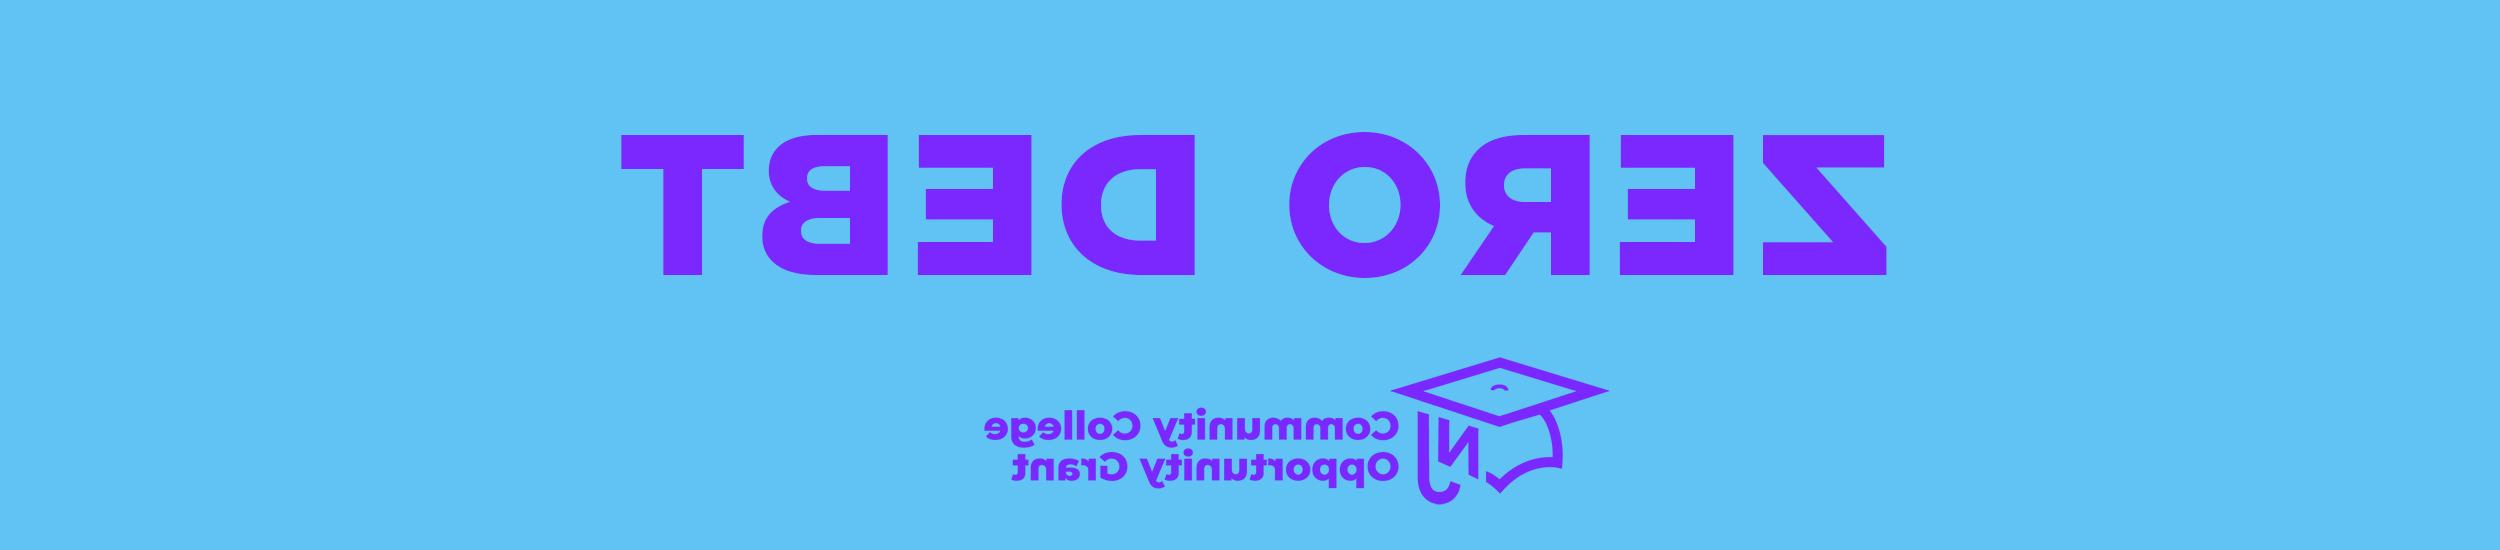 zero debt ccog logo